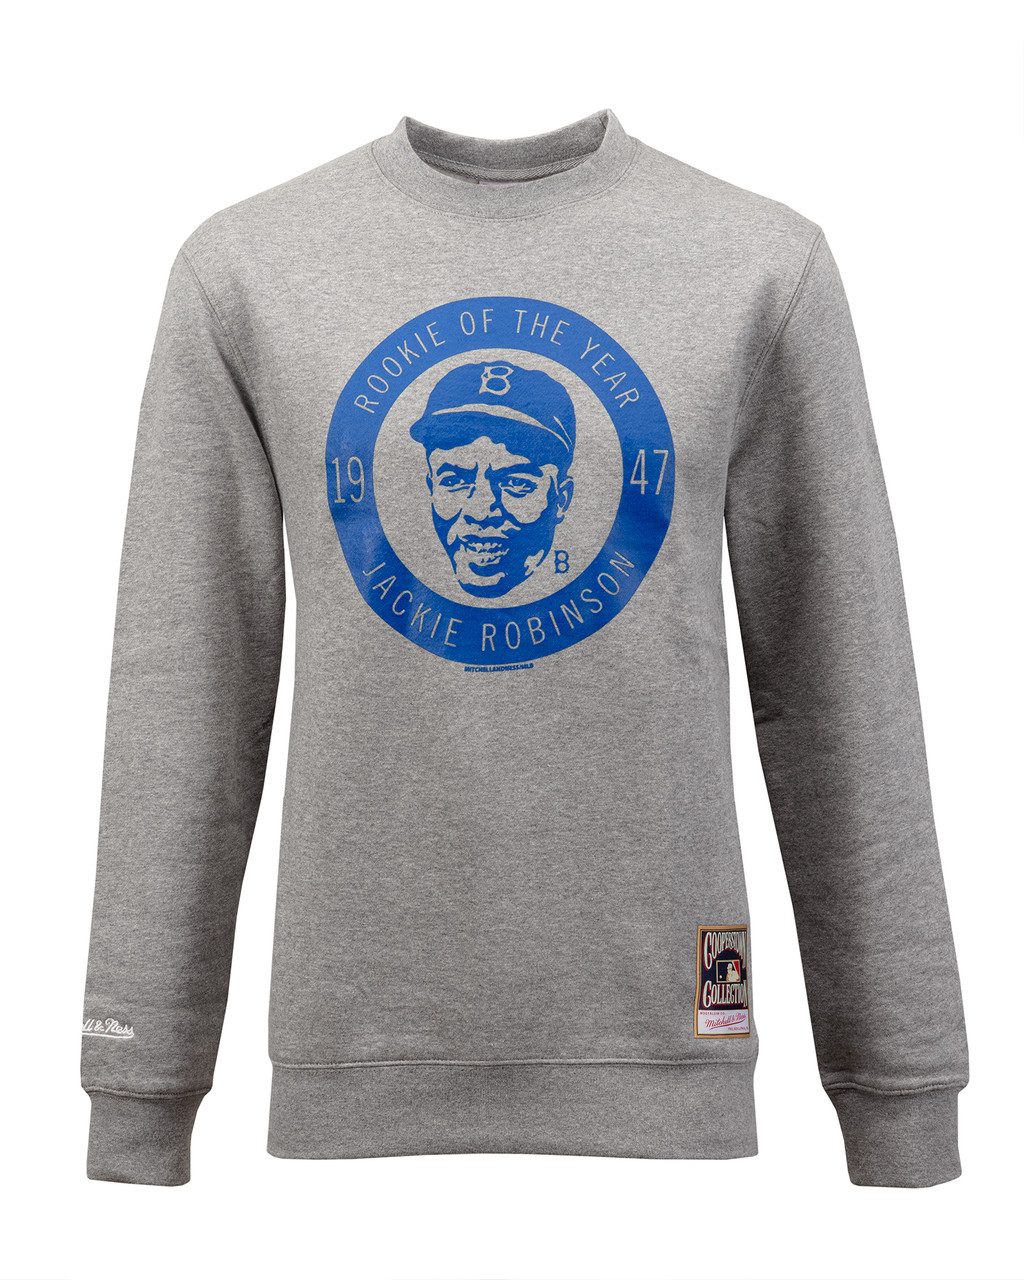 MLB, Shirts, Baby Blue Jackie Robinson Jersey